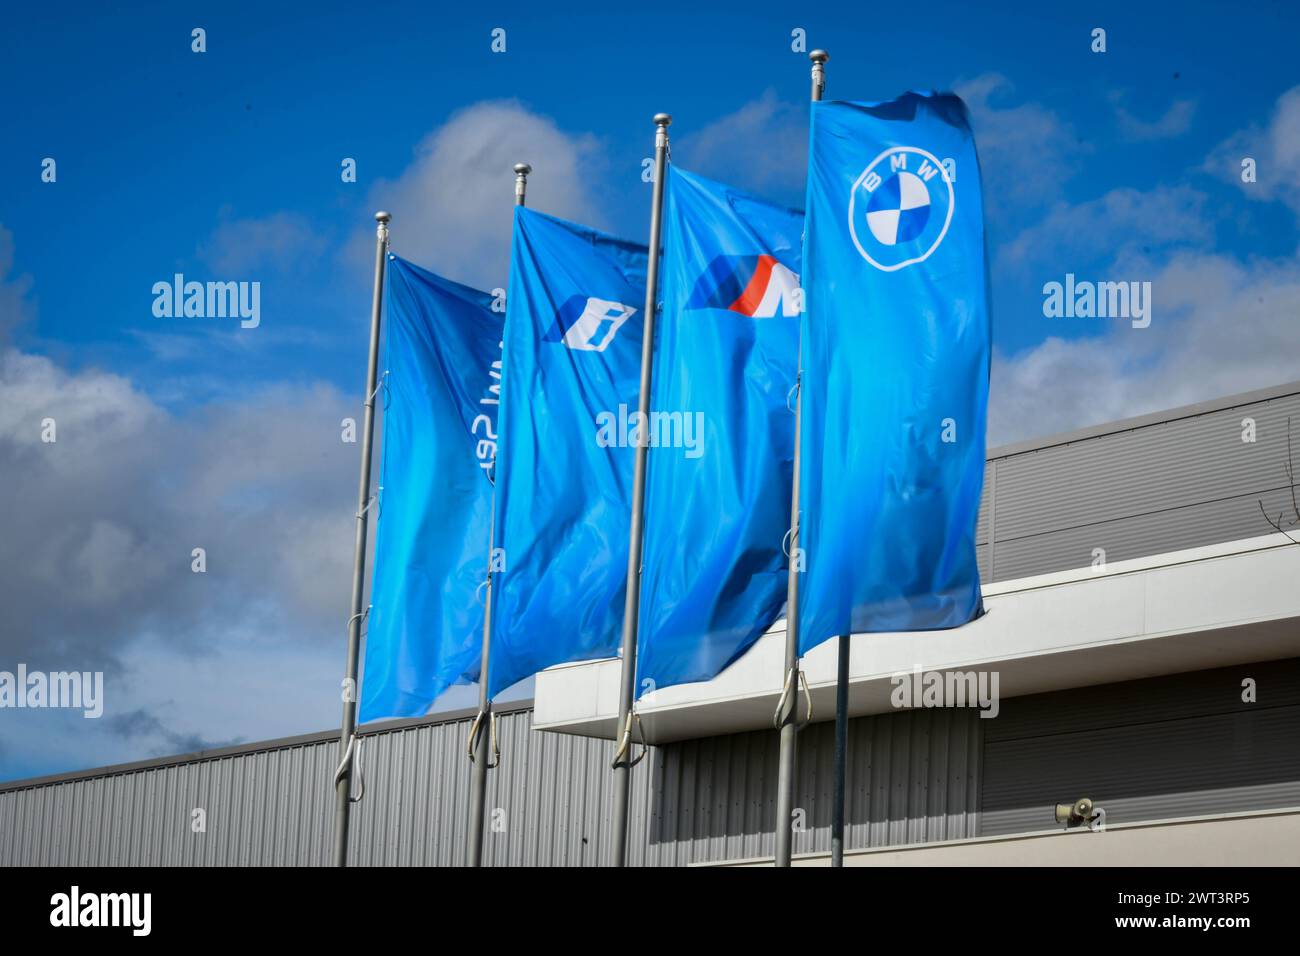 BMW Mini shop Stock Photo